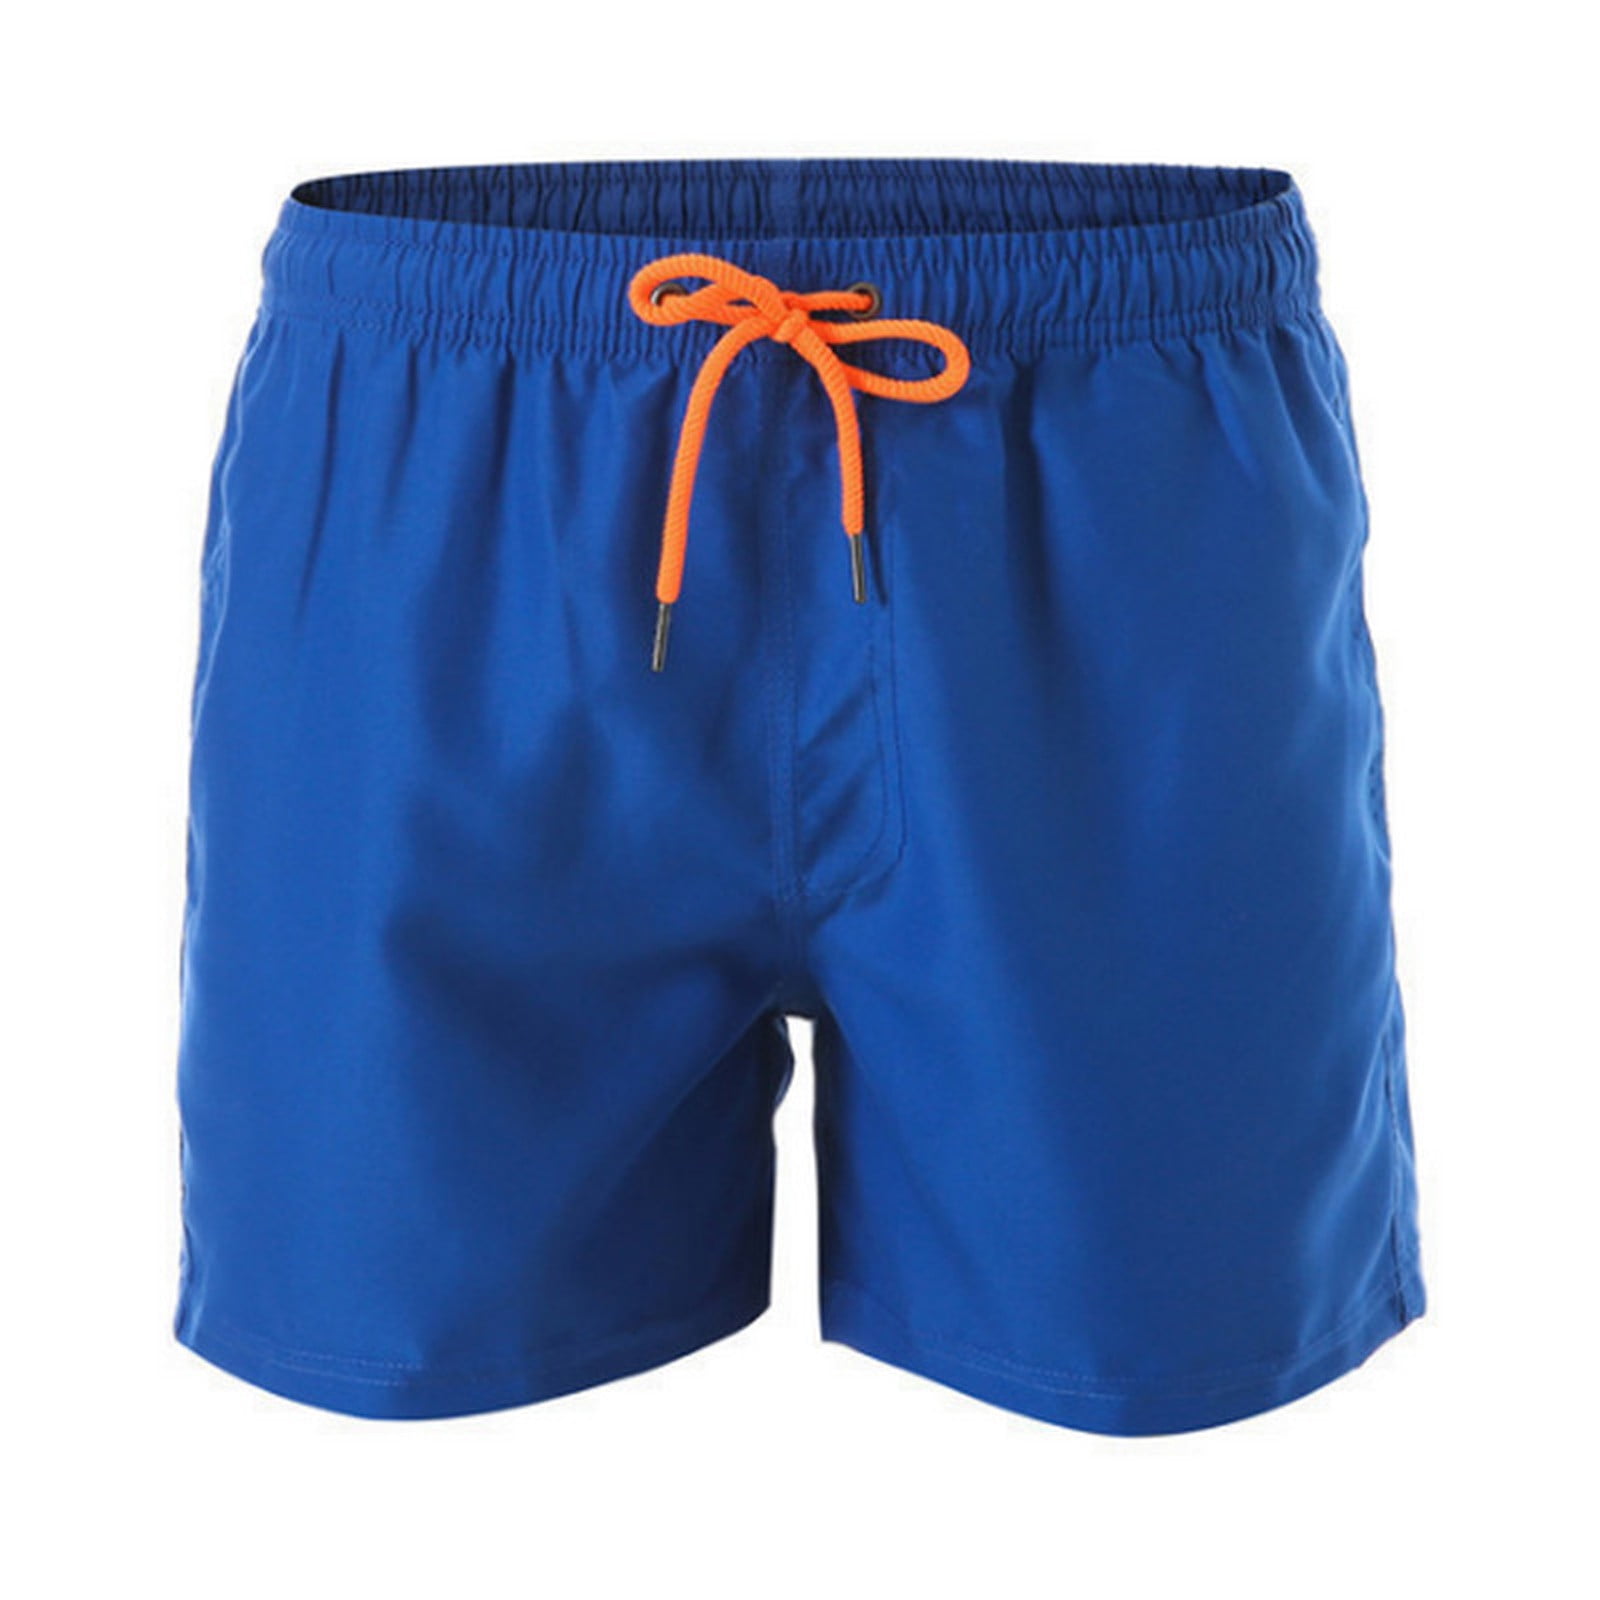 Men Swim Trunks Board Shorts Quick Dry Drawstring Elastic Waist Solid Shorts